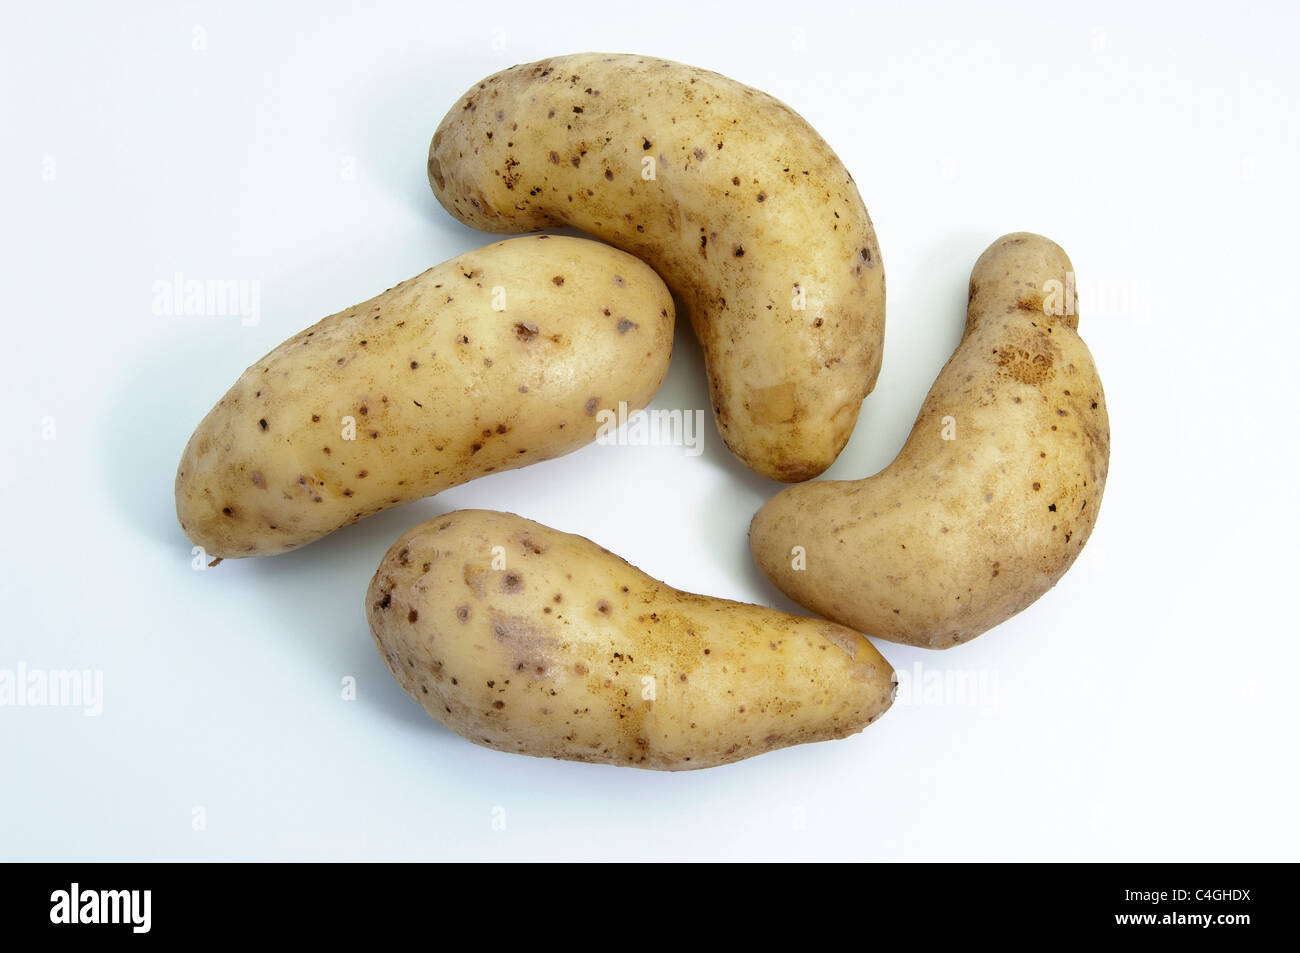 Potato (Solanum tuberosum Emma). Tubers, studio picture against a white background. Stock Photo